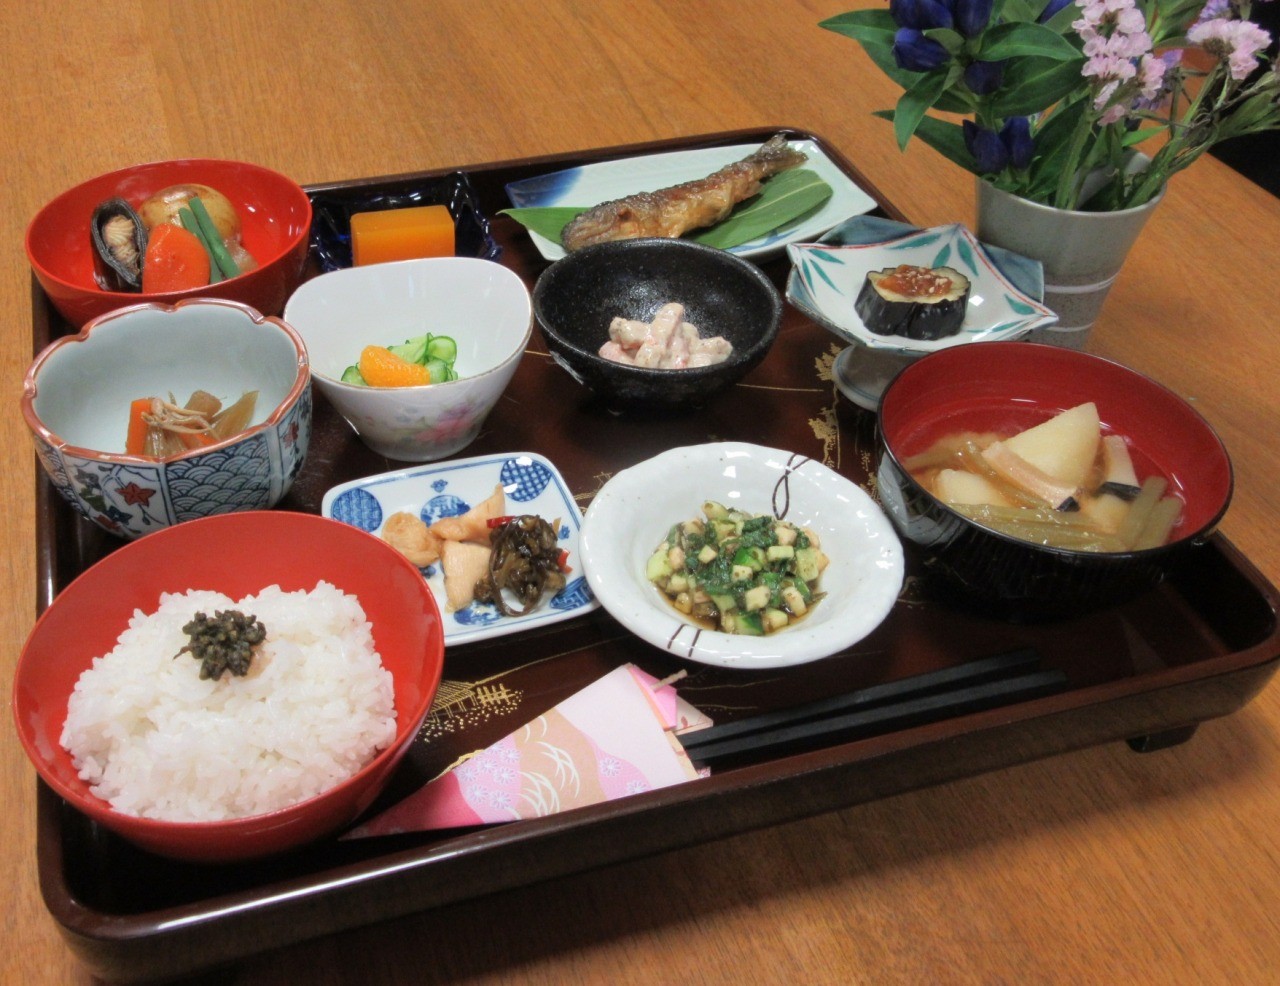 Enjoy local dishes using local ingredients at farm restaurants [Mogami -cho]